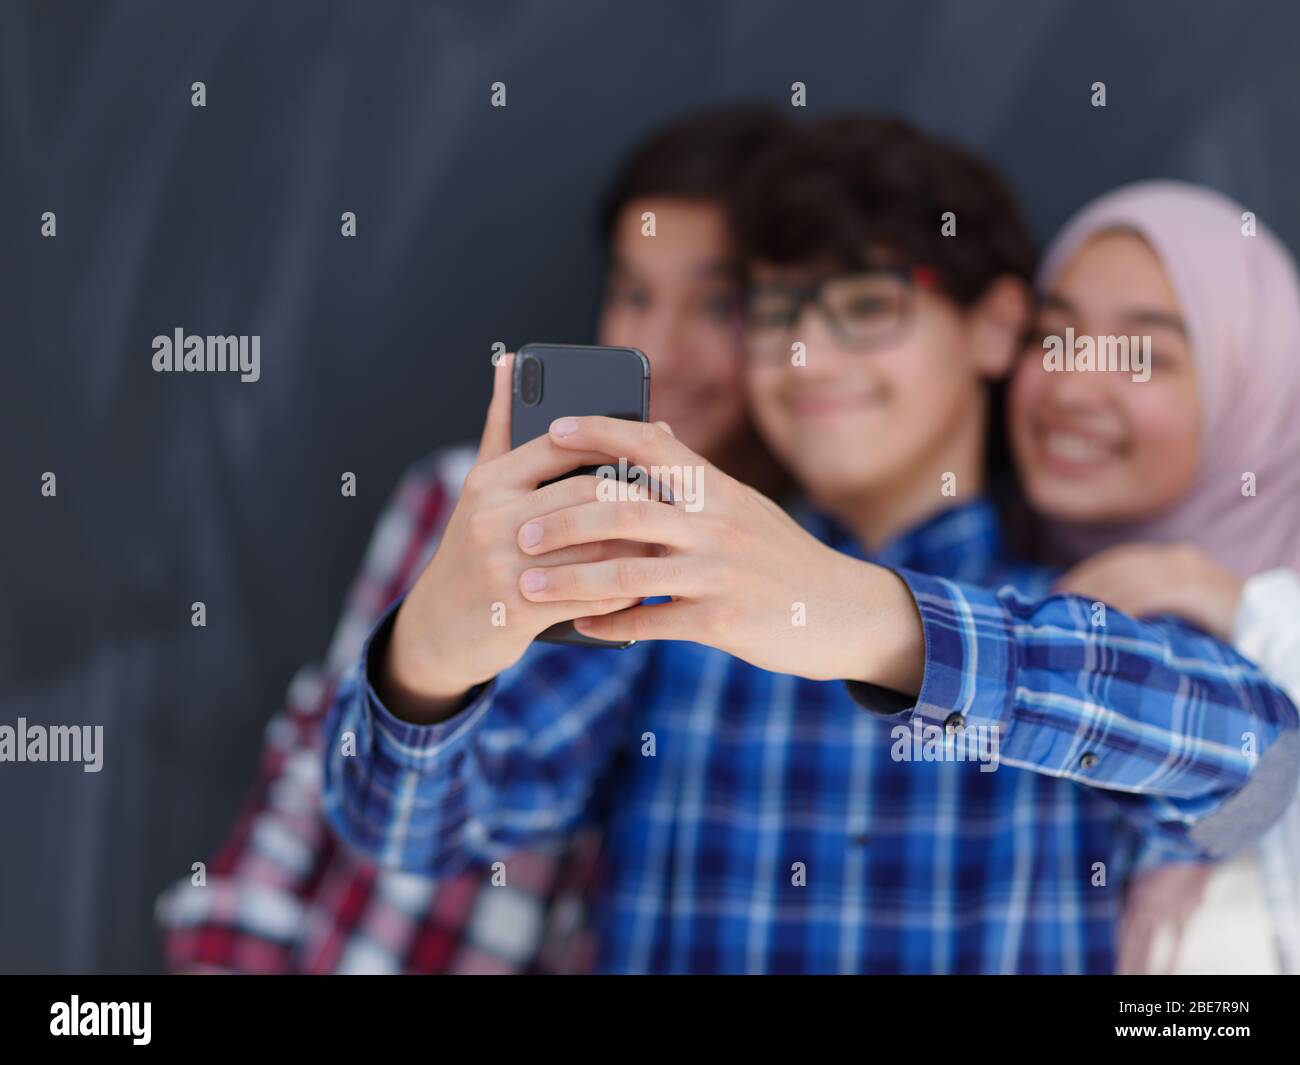 arab teen on cam free pics